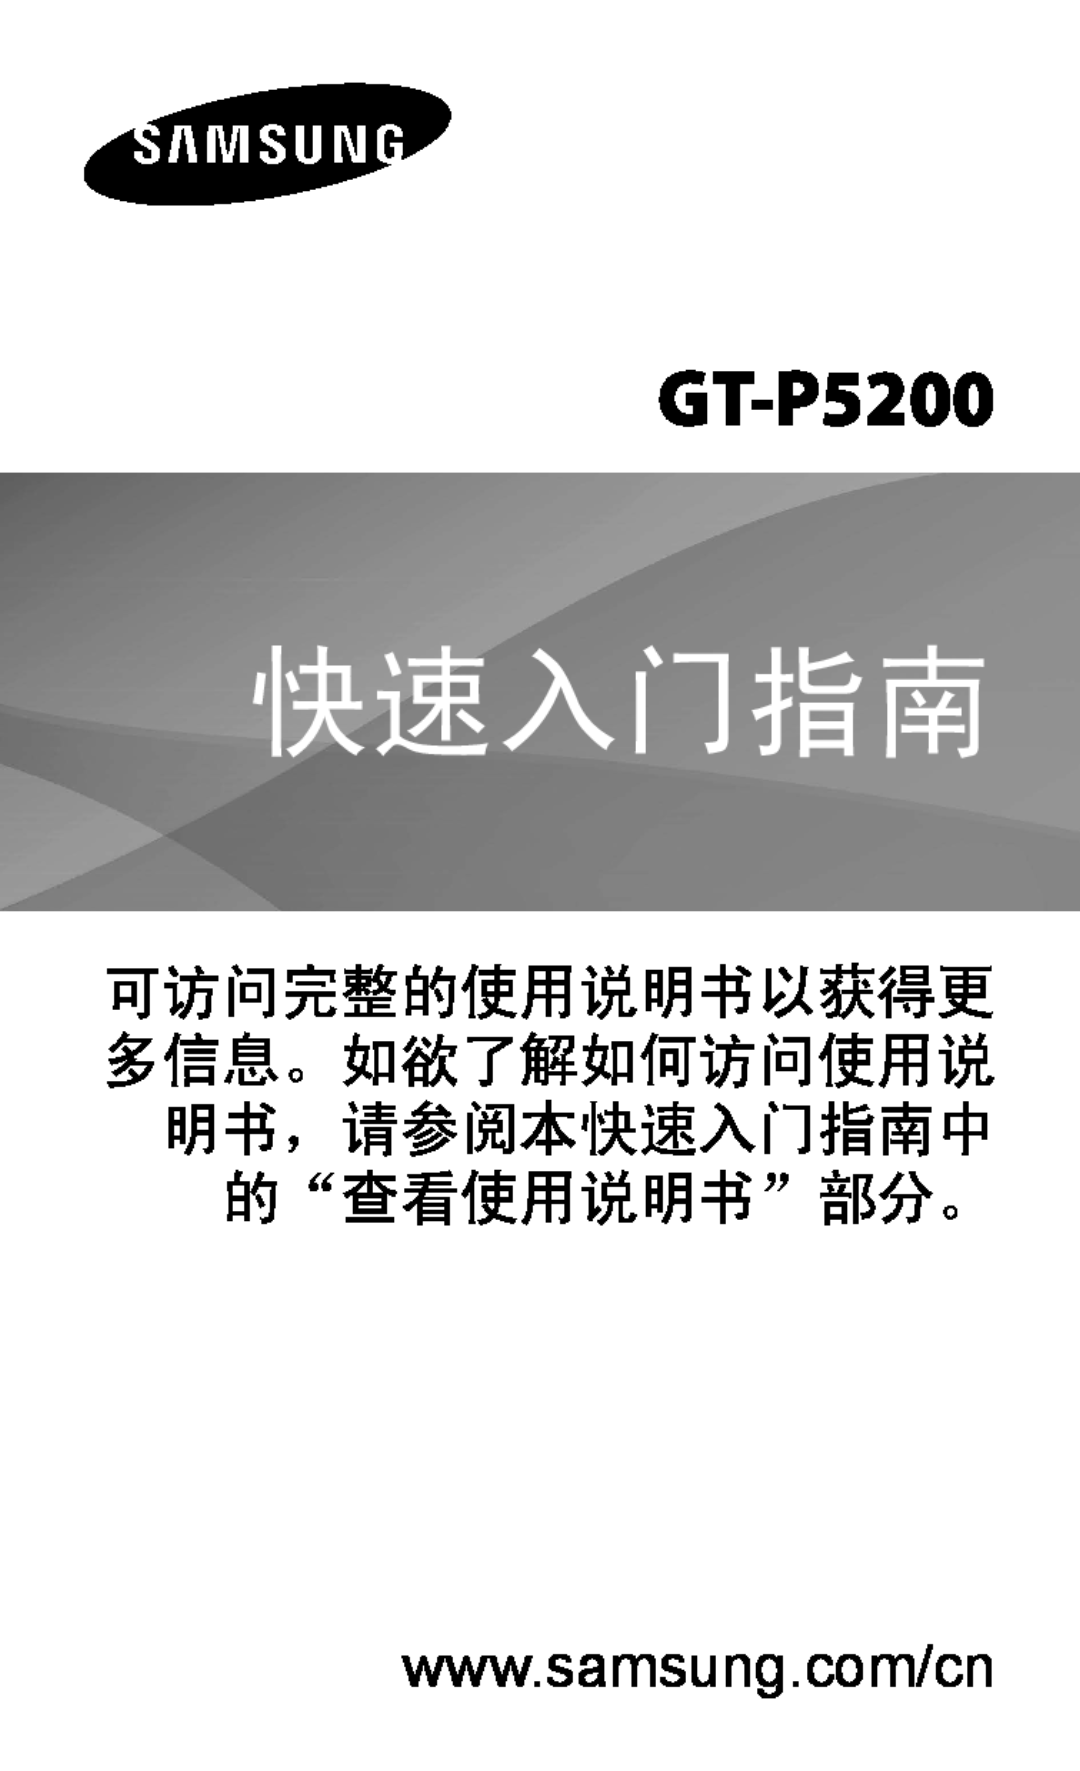 Samsung GT-P5200ZWAXEO, GT-P5200ZWAEUR, GT-P5200MKAATO manual 可访问完整的使用说明书以获得更 多信息。如欲了解如何访问使用说 明书，请参阅本快速入门指南中 的“查看使用说明书”部分。 